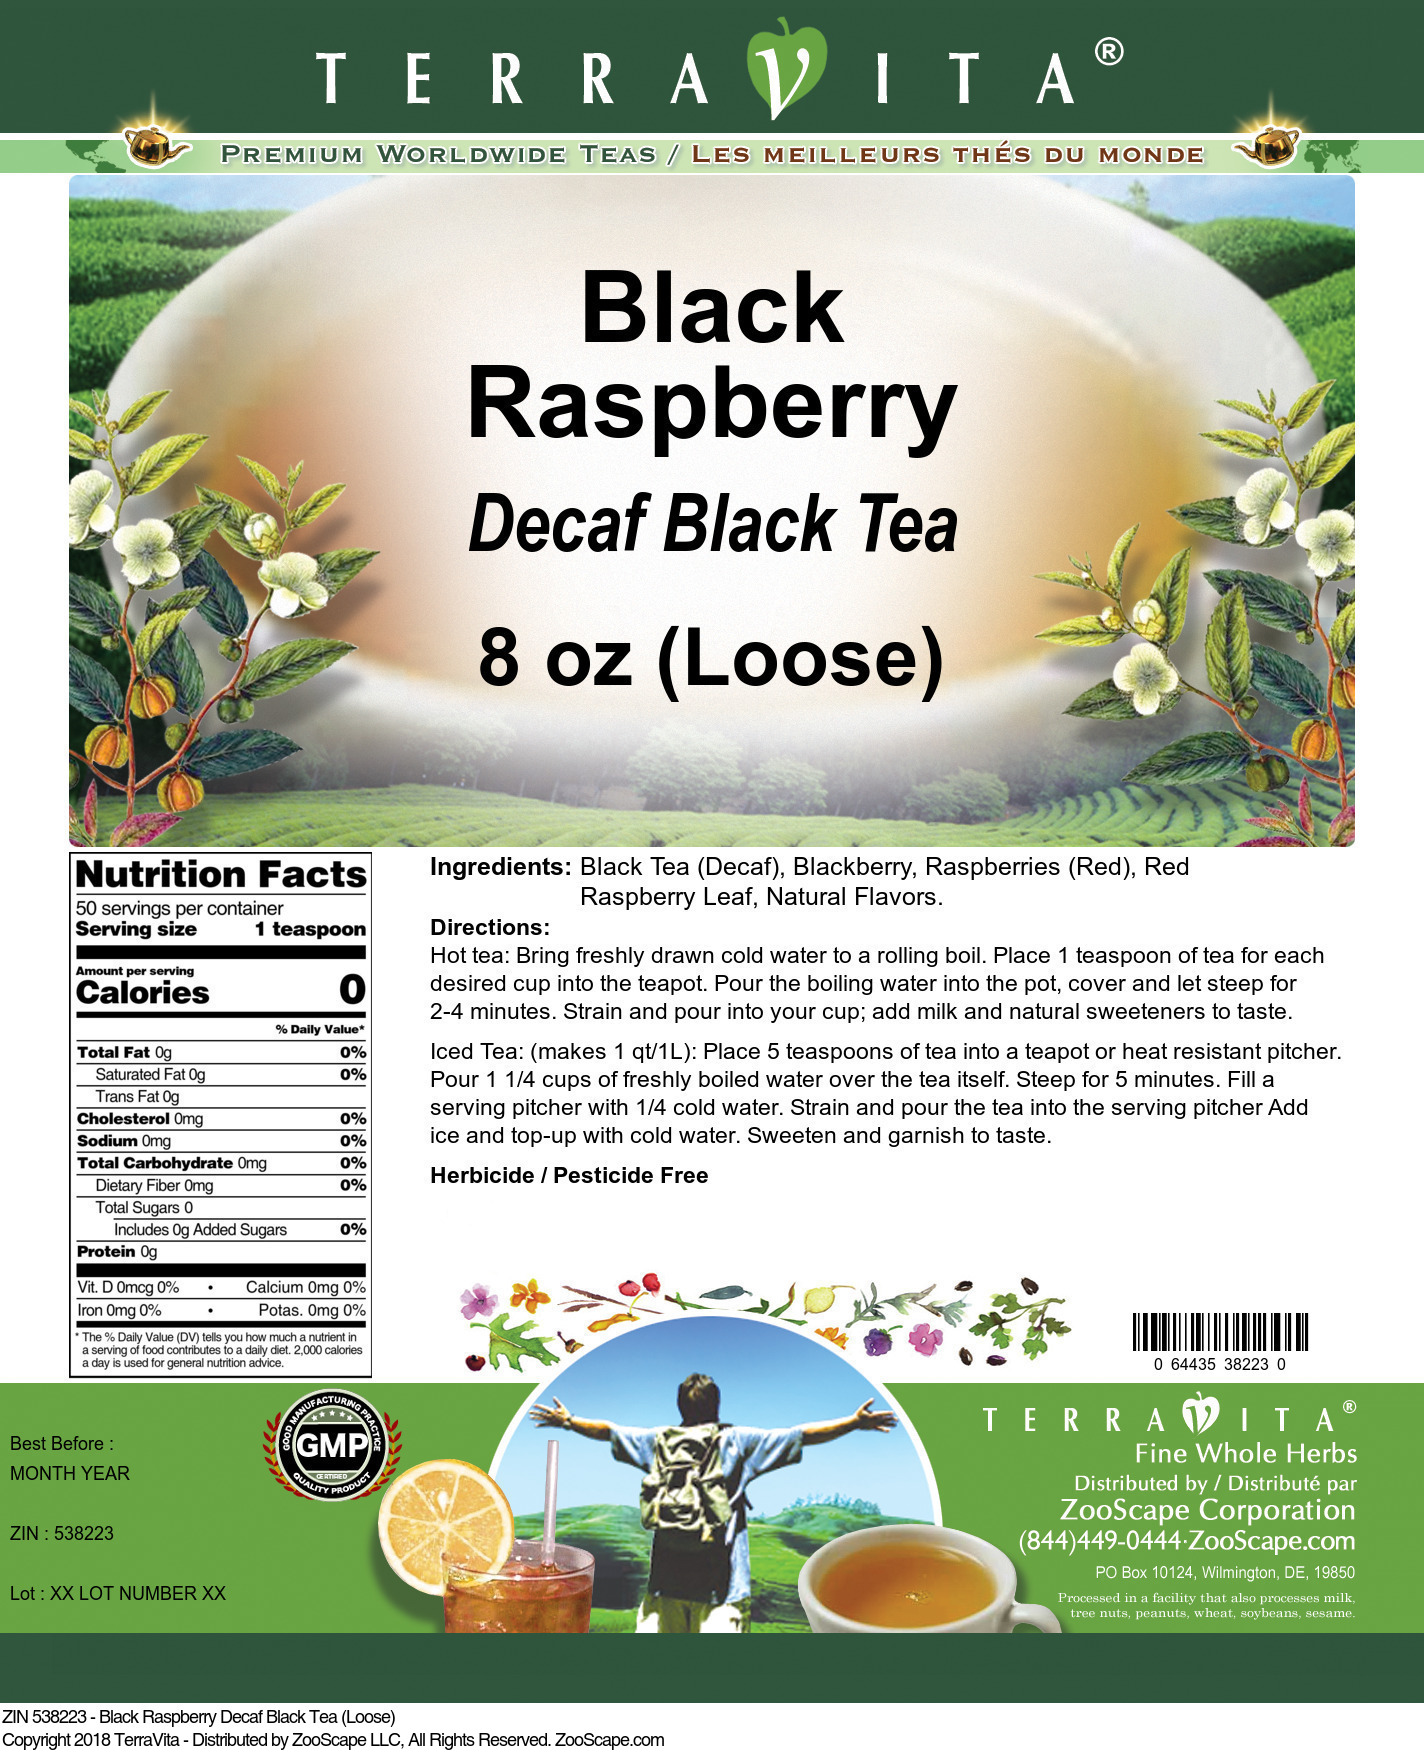 Black Raspberry Decaf Black Tea (Loose) - Label